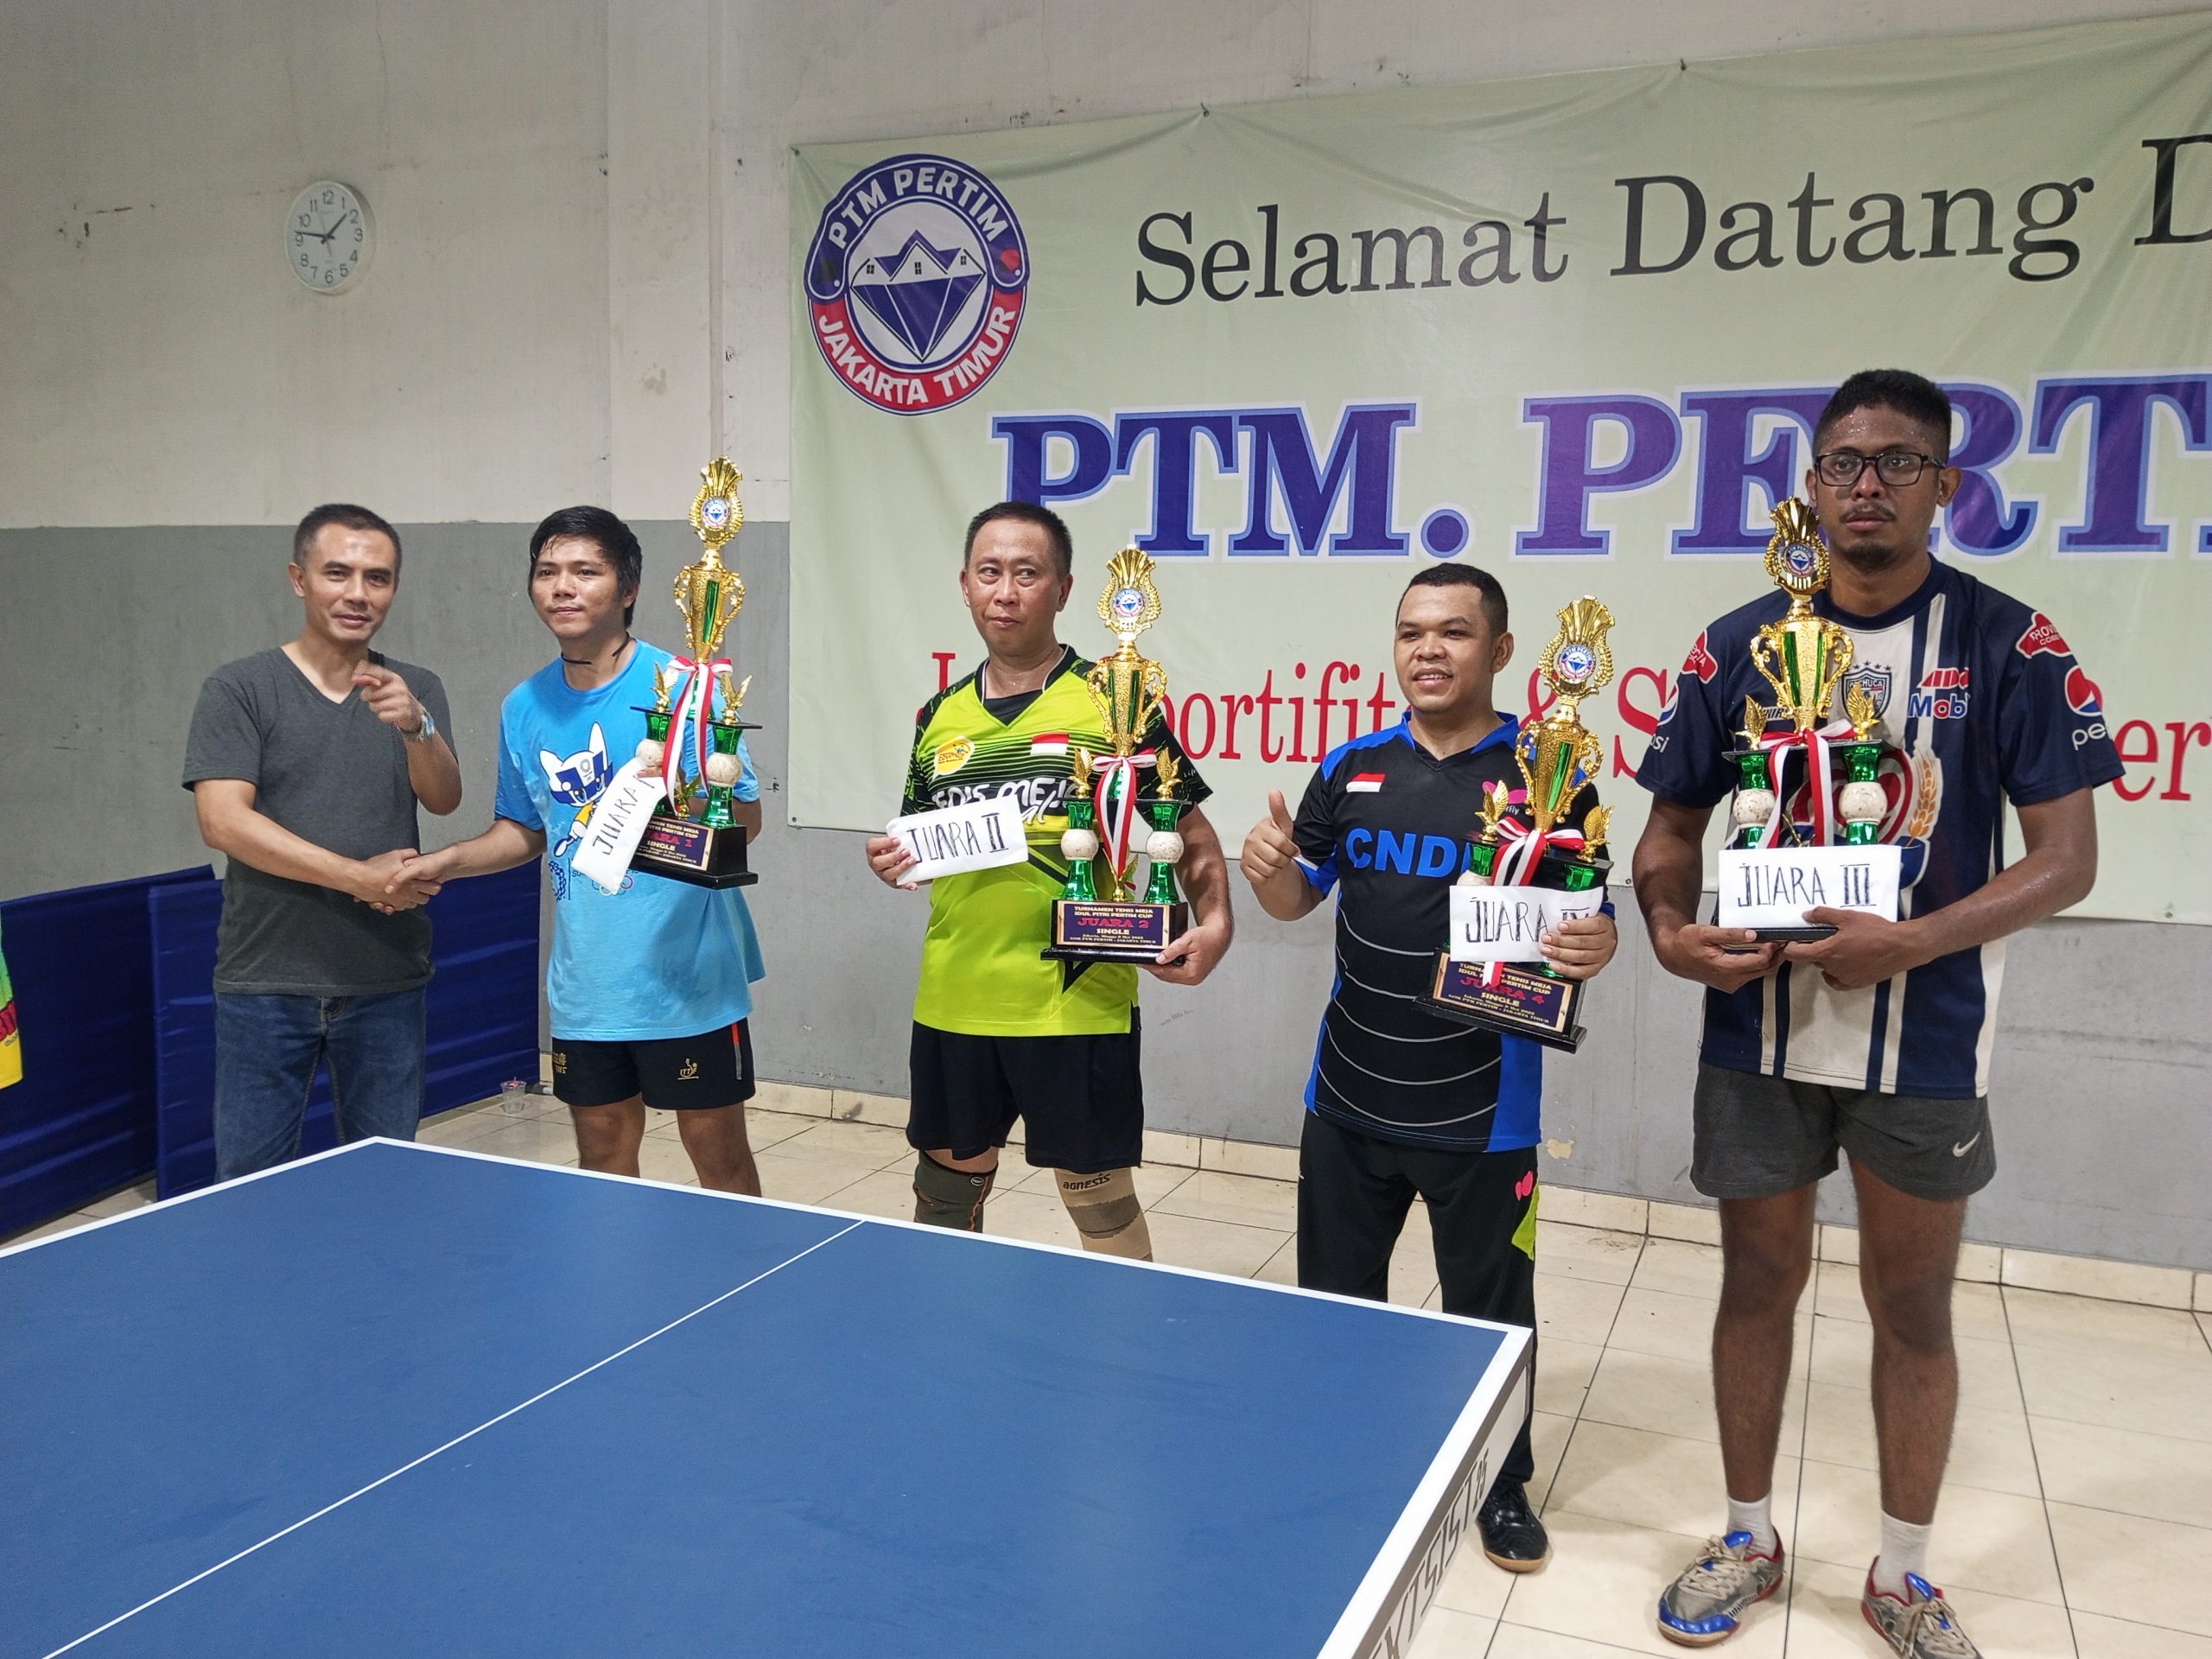 Rian (PTM Yuna) Juara I dan Edy Mulyawan (PTM EDYMCS) Juara II Turnamen Tenis Meja PTM Pertim